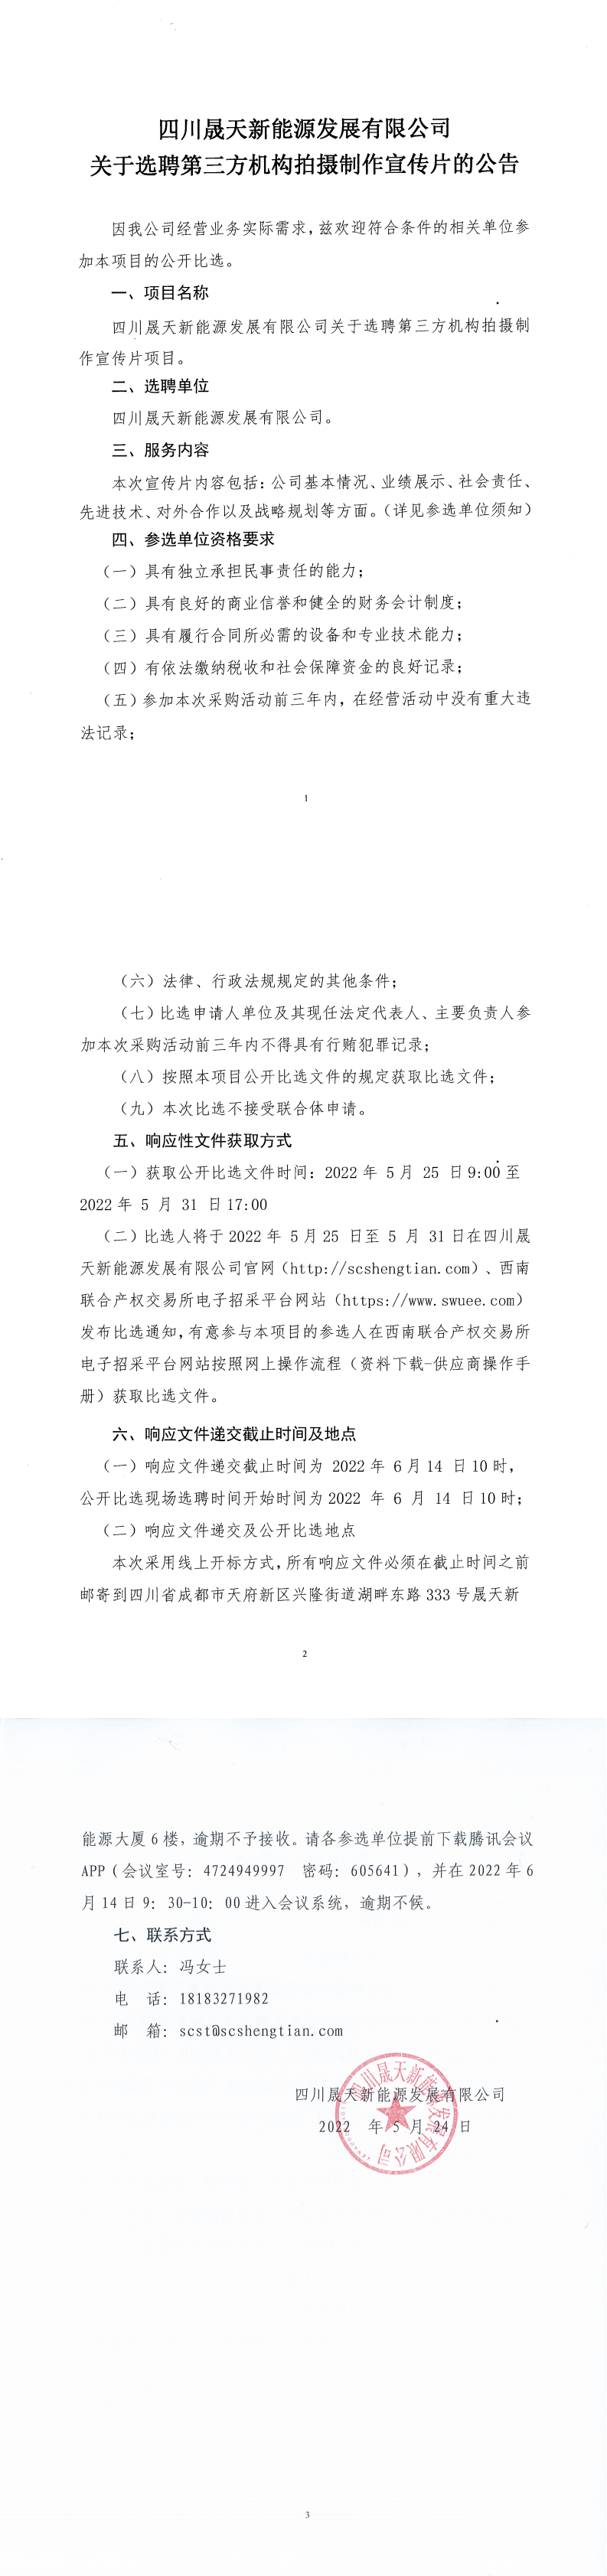 leyu乐鱼体育APP官方网站关于选聘第三方机构拍摄制作宣传片公开比选公告(1)_0.png